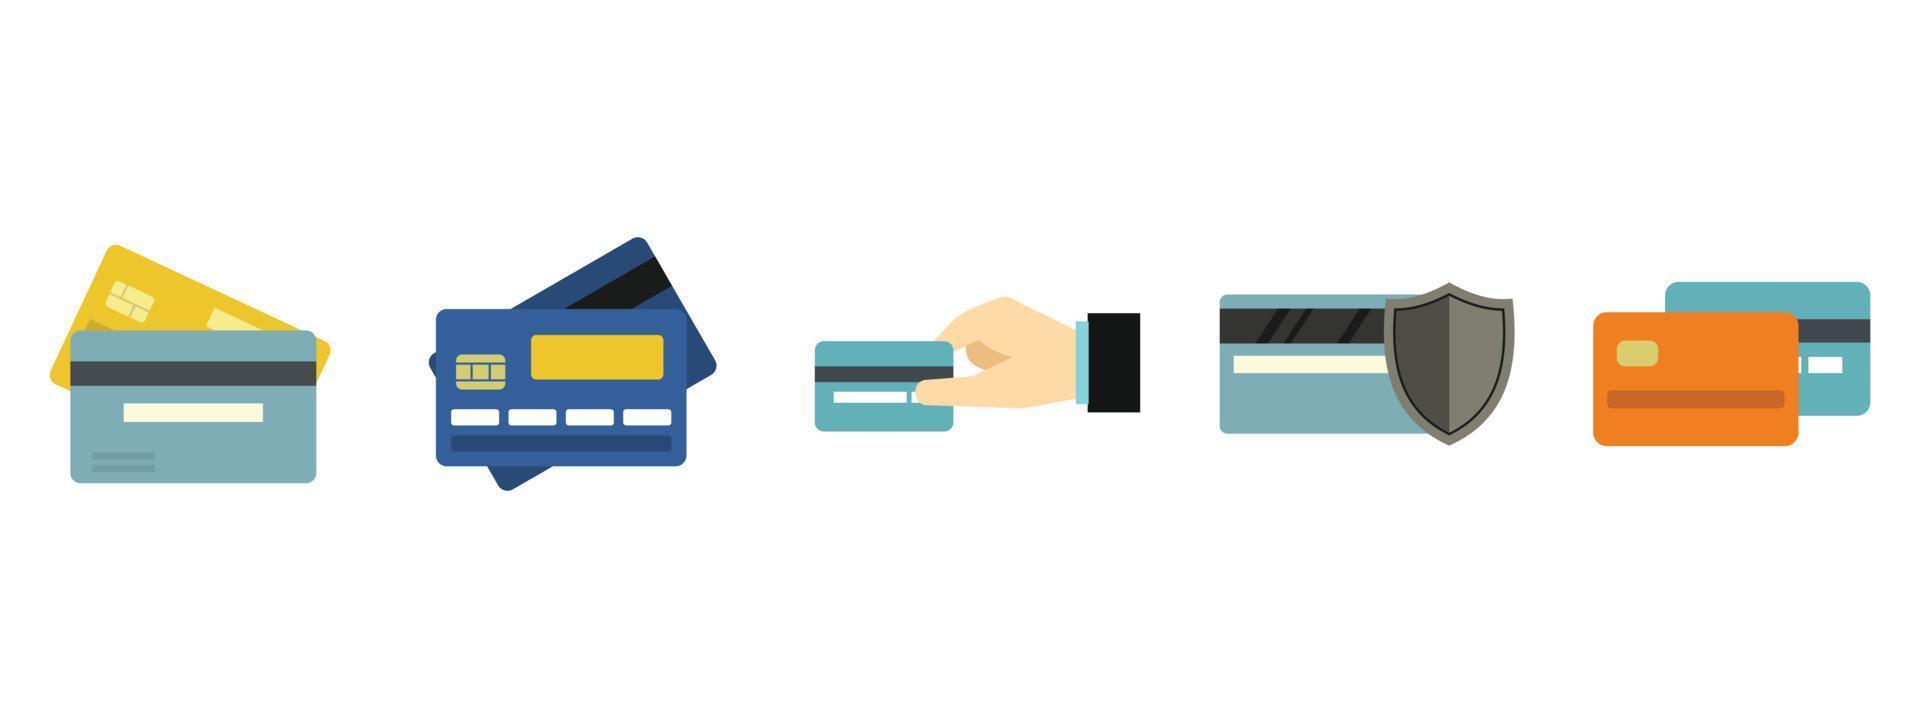 conjunto de ícones de cartão de crédito, estilo simples vetor